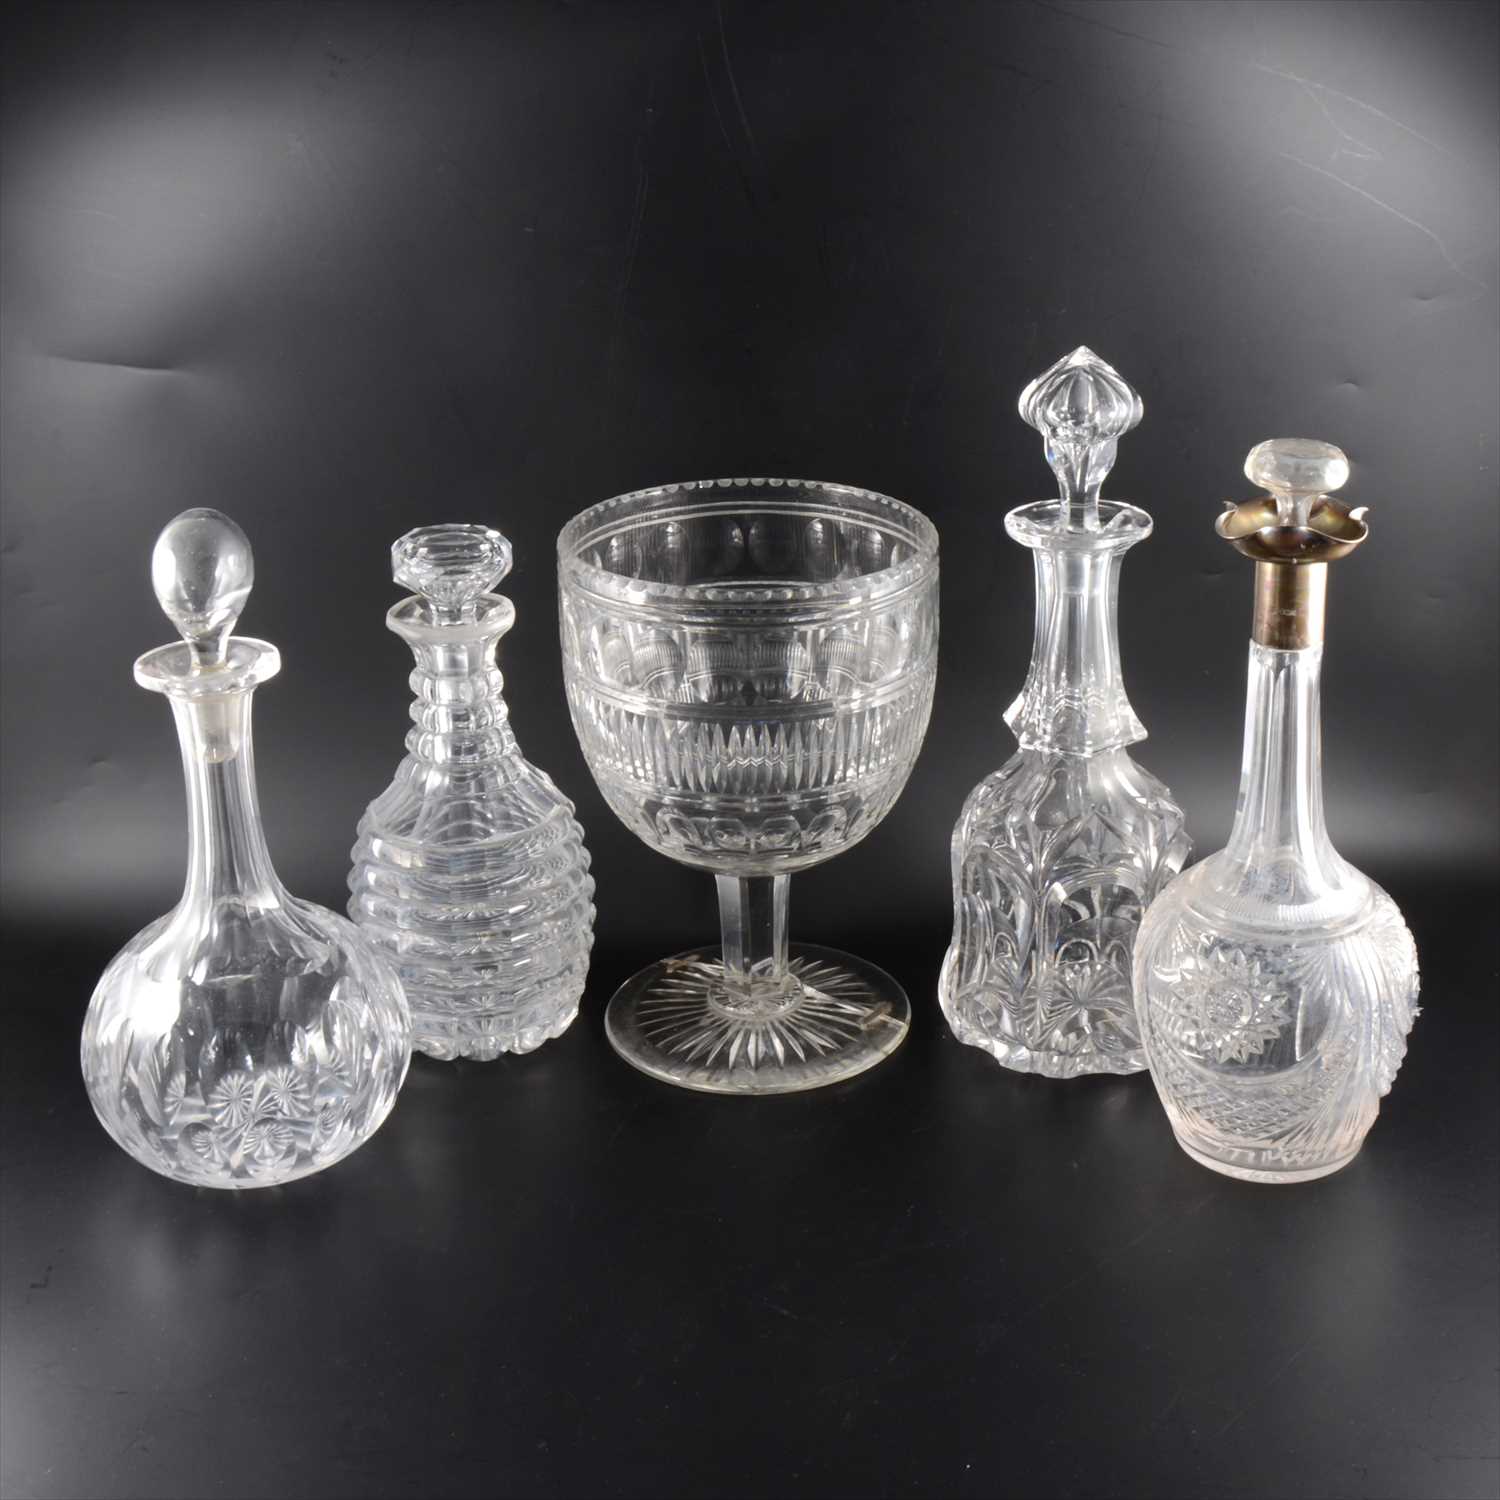 Lot 32 - A quantity of glassware, including a silver-collared decanter